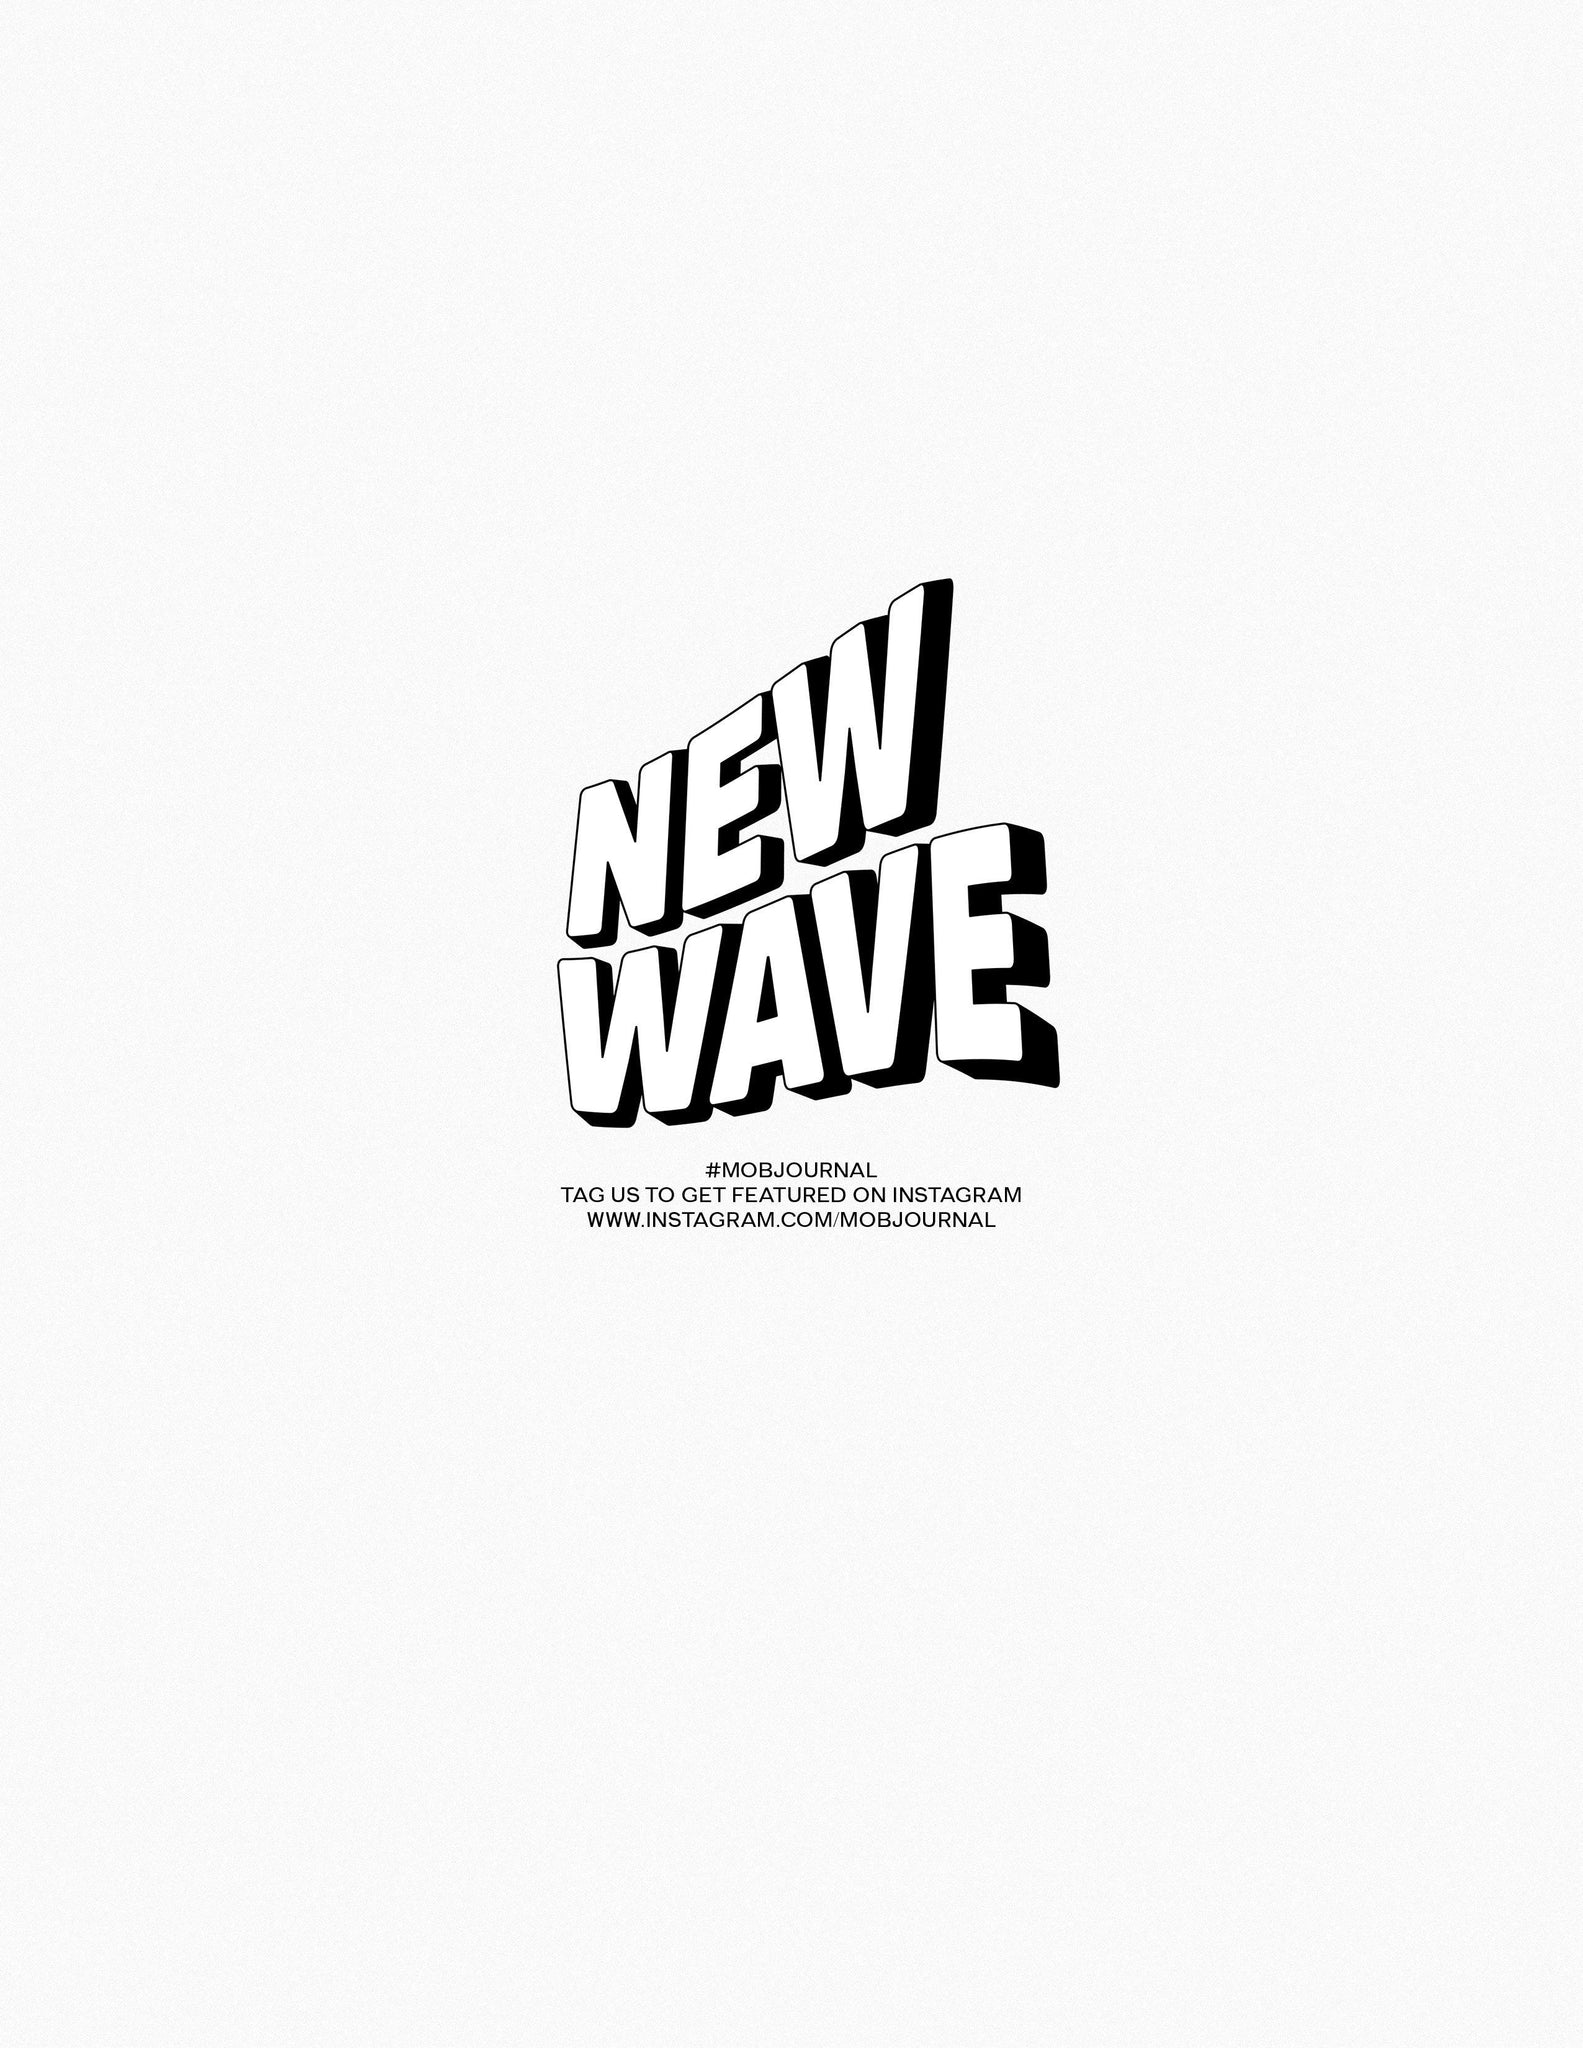 NEW WAVE | VOLUME FOURTEEN | ISSUE #05 - Mob Journal